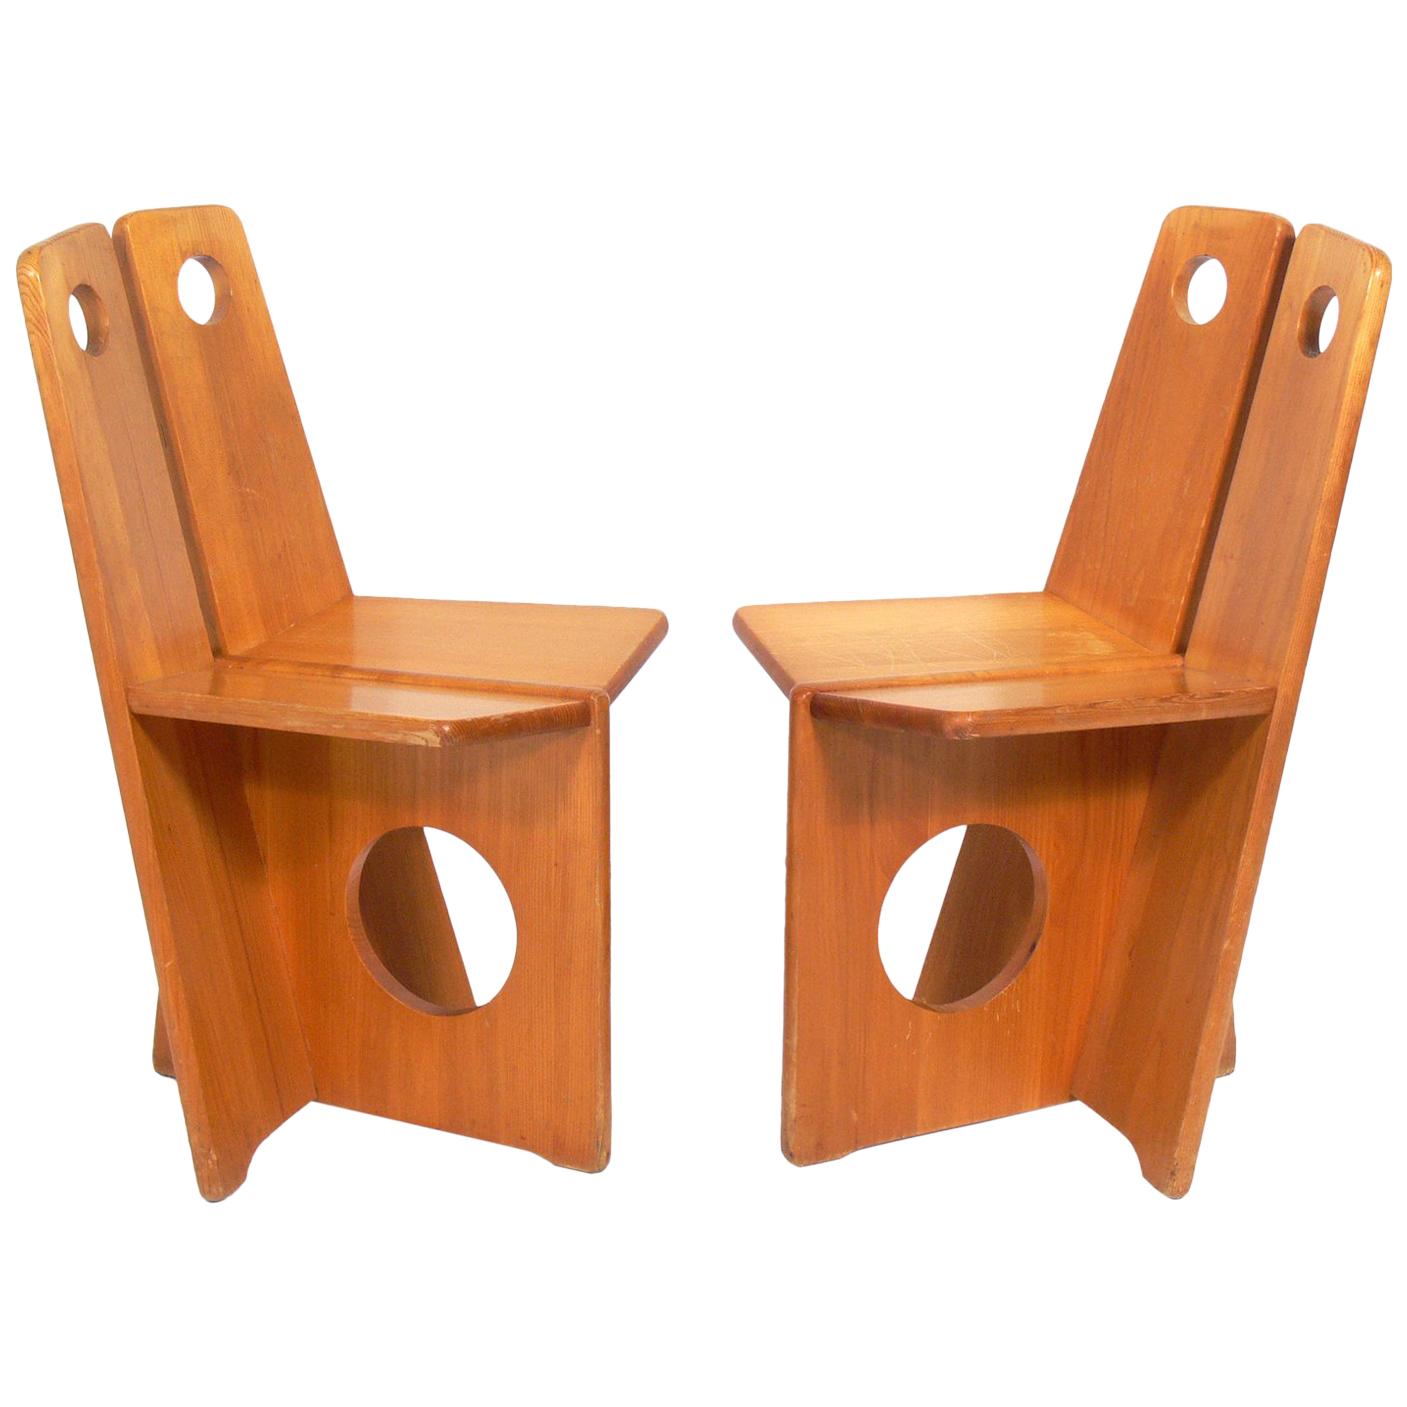 Pair of Low Slung German Constructivist Chairs